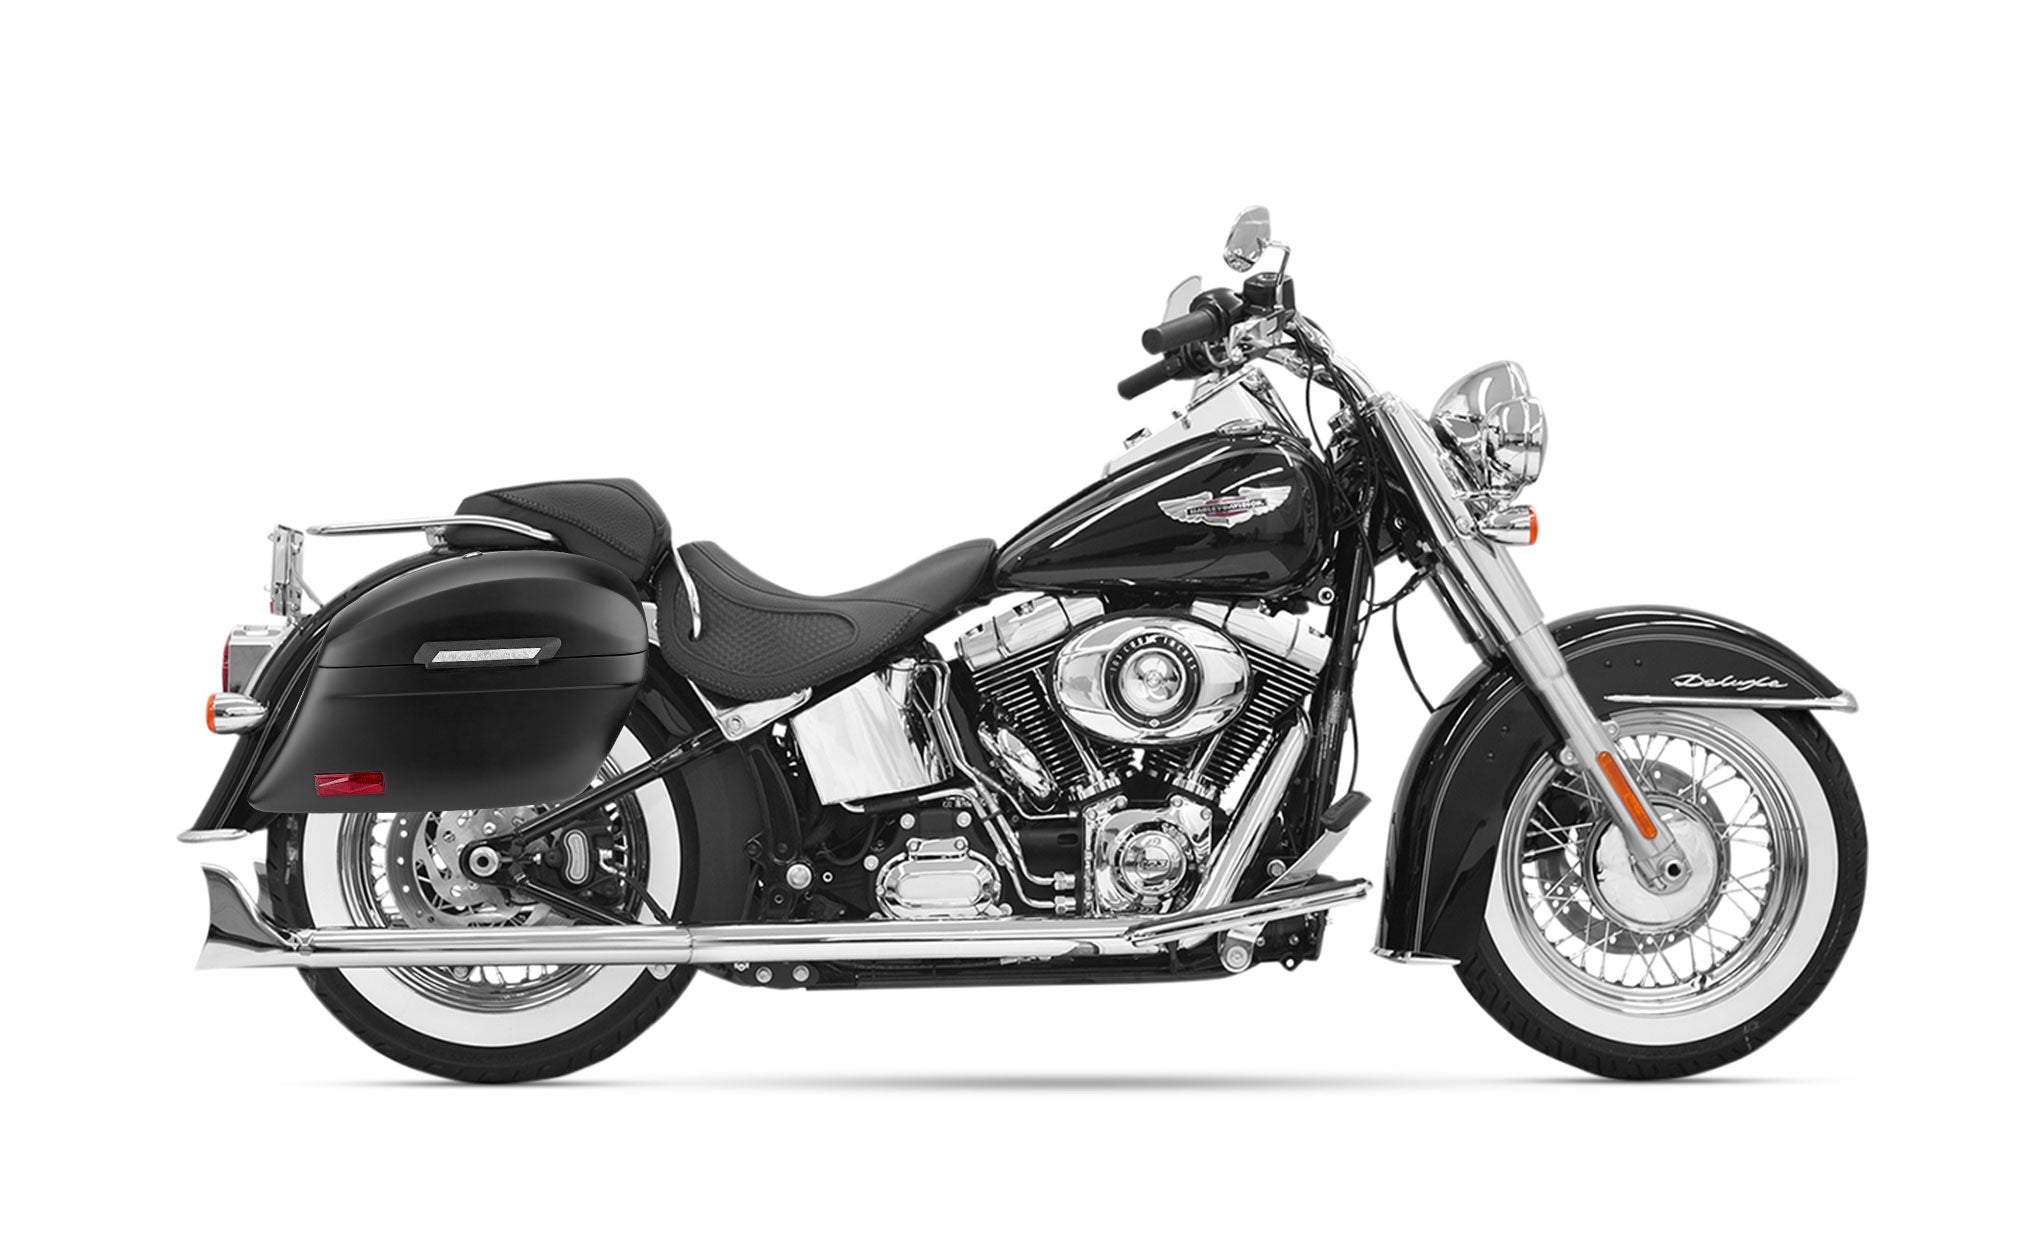 44L - Lamellar Stallion Extra Large Leather Covered Motorcycle Hard Saddlebags for Harley Softail Heritage FLSTICCI on Bike Photo @expand